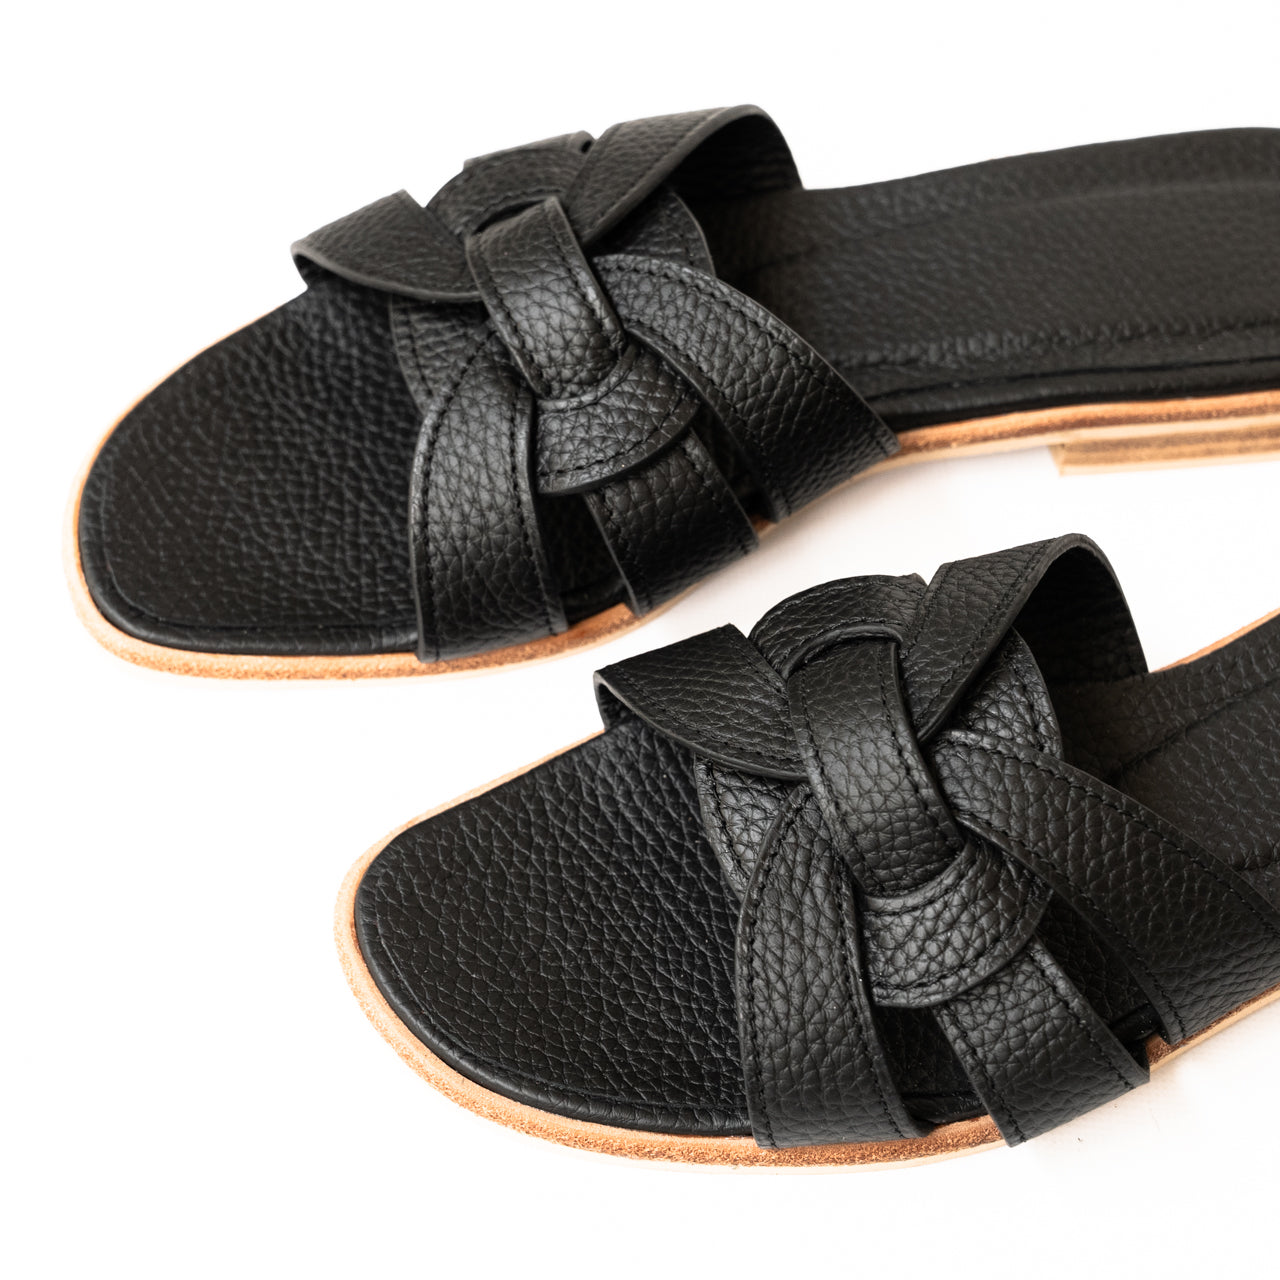 Leather flat sandals "Lupus" Cuir Mash/Black